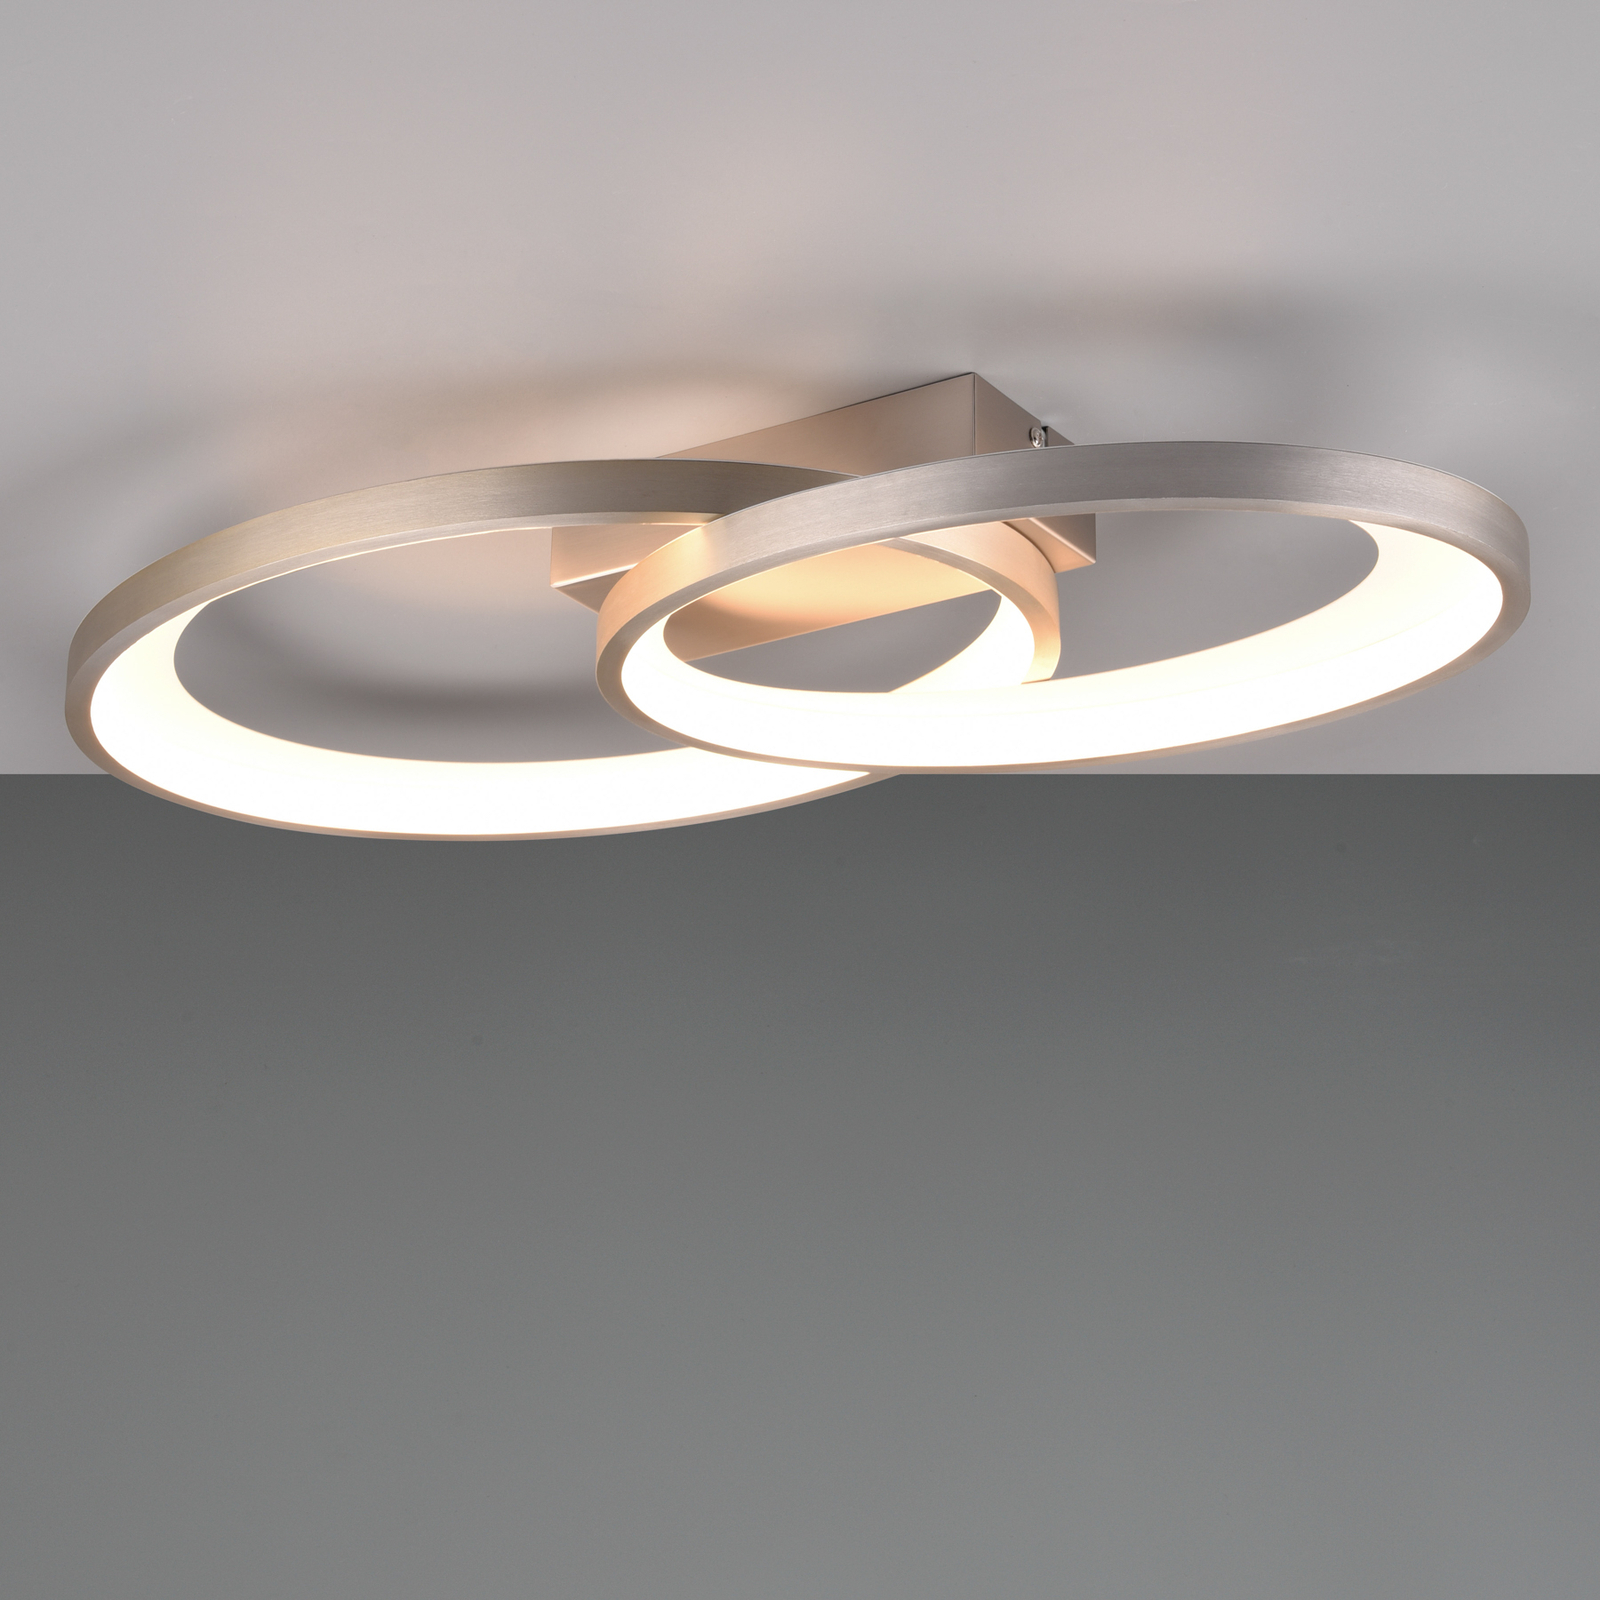 Malaga LED ceiling light with 2 rings, matt nickel